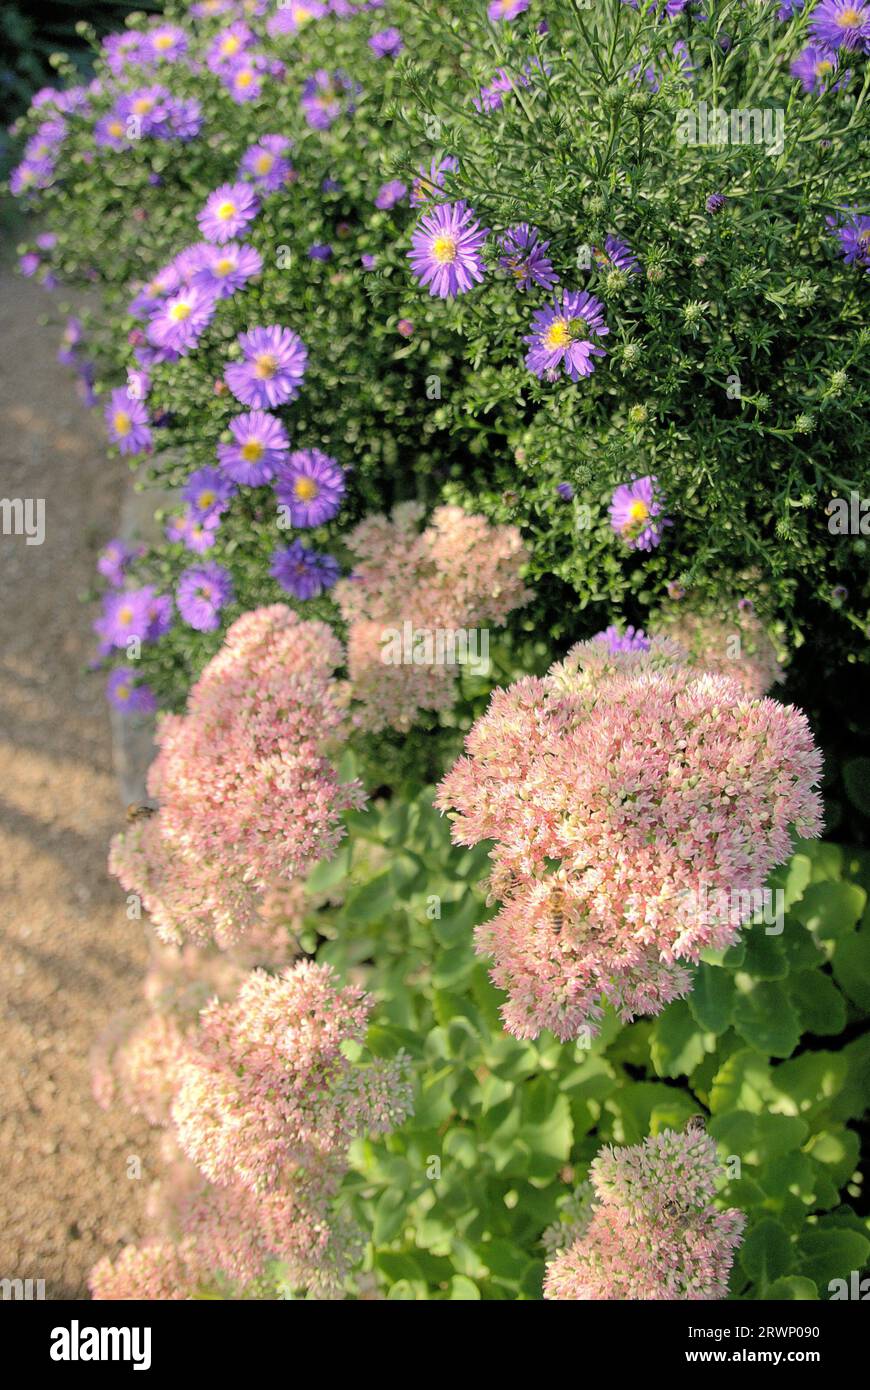 Scenic way throogh garden with iceplant (sedum spectabile) and New York aster (symphyotrichum novi-belgii) Stock Photo